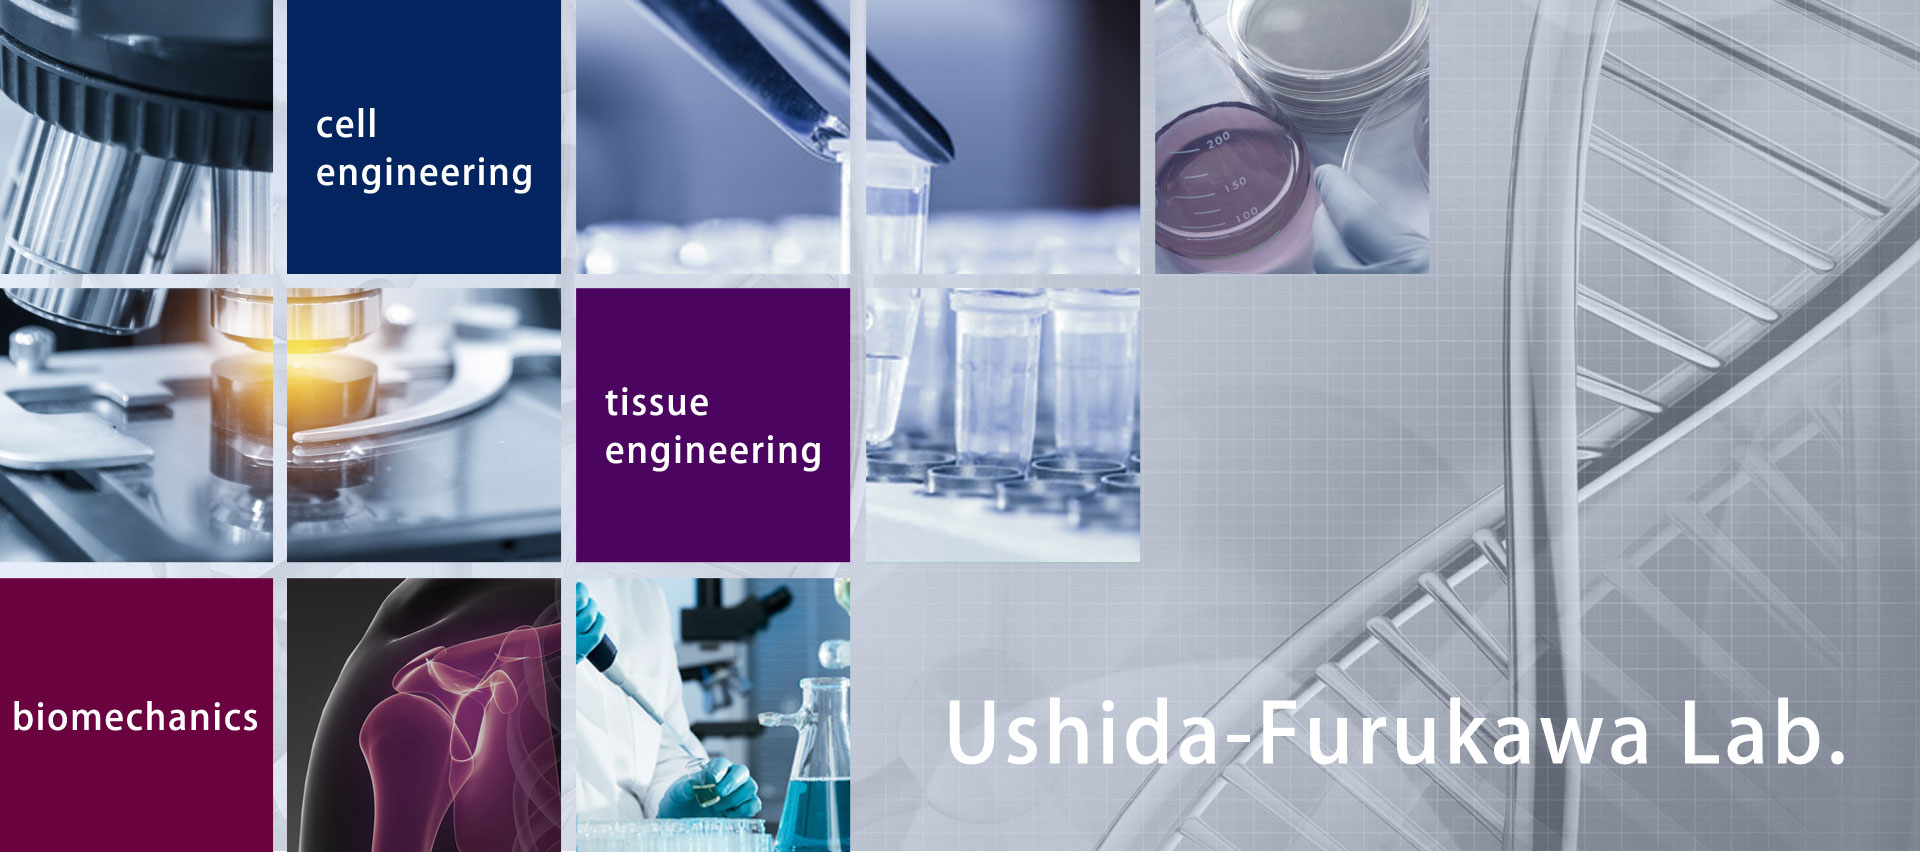 cell engineering, tissue engineering, biomechanics, Ushida-Furukawa Lab.